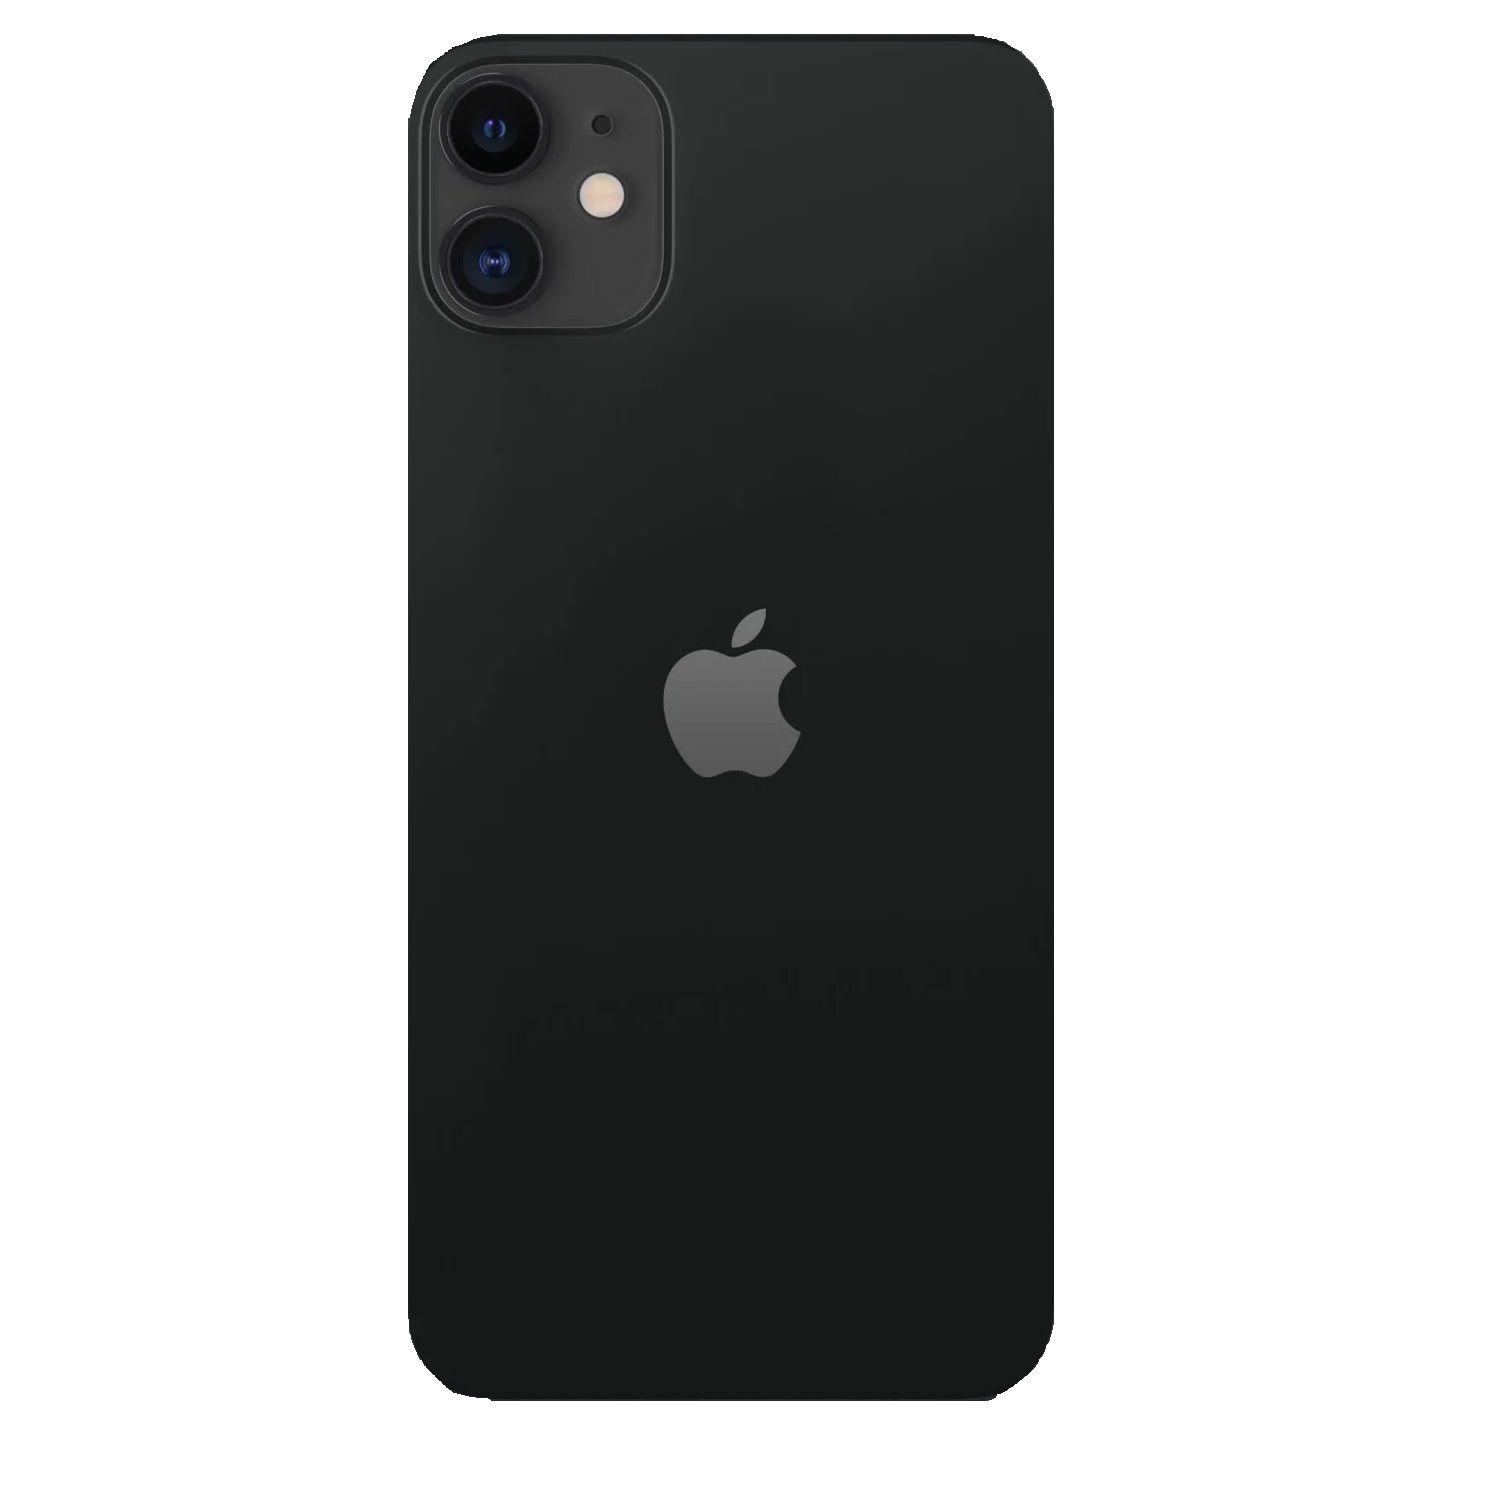 Iphone 11 black flip + camera slide